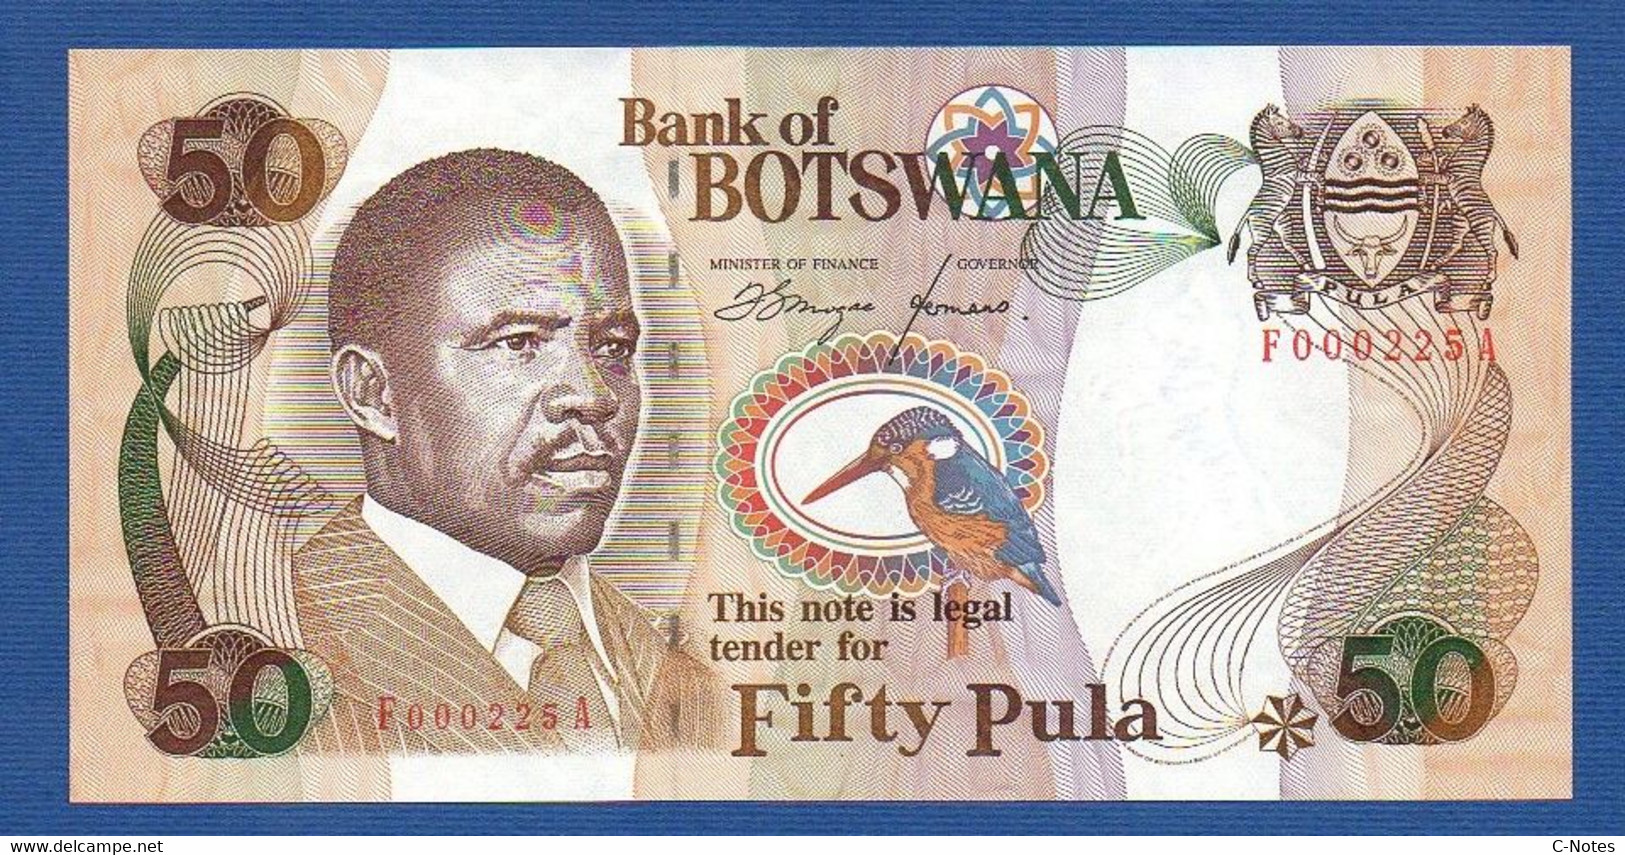 BOTSWANA - P.14 – 50 PULA  ND (1992) UNC, Prefix F 000225 A Low Serial Number - Botswana